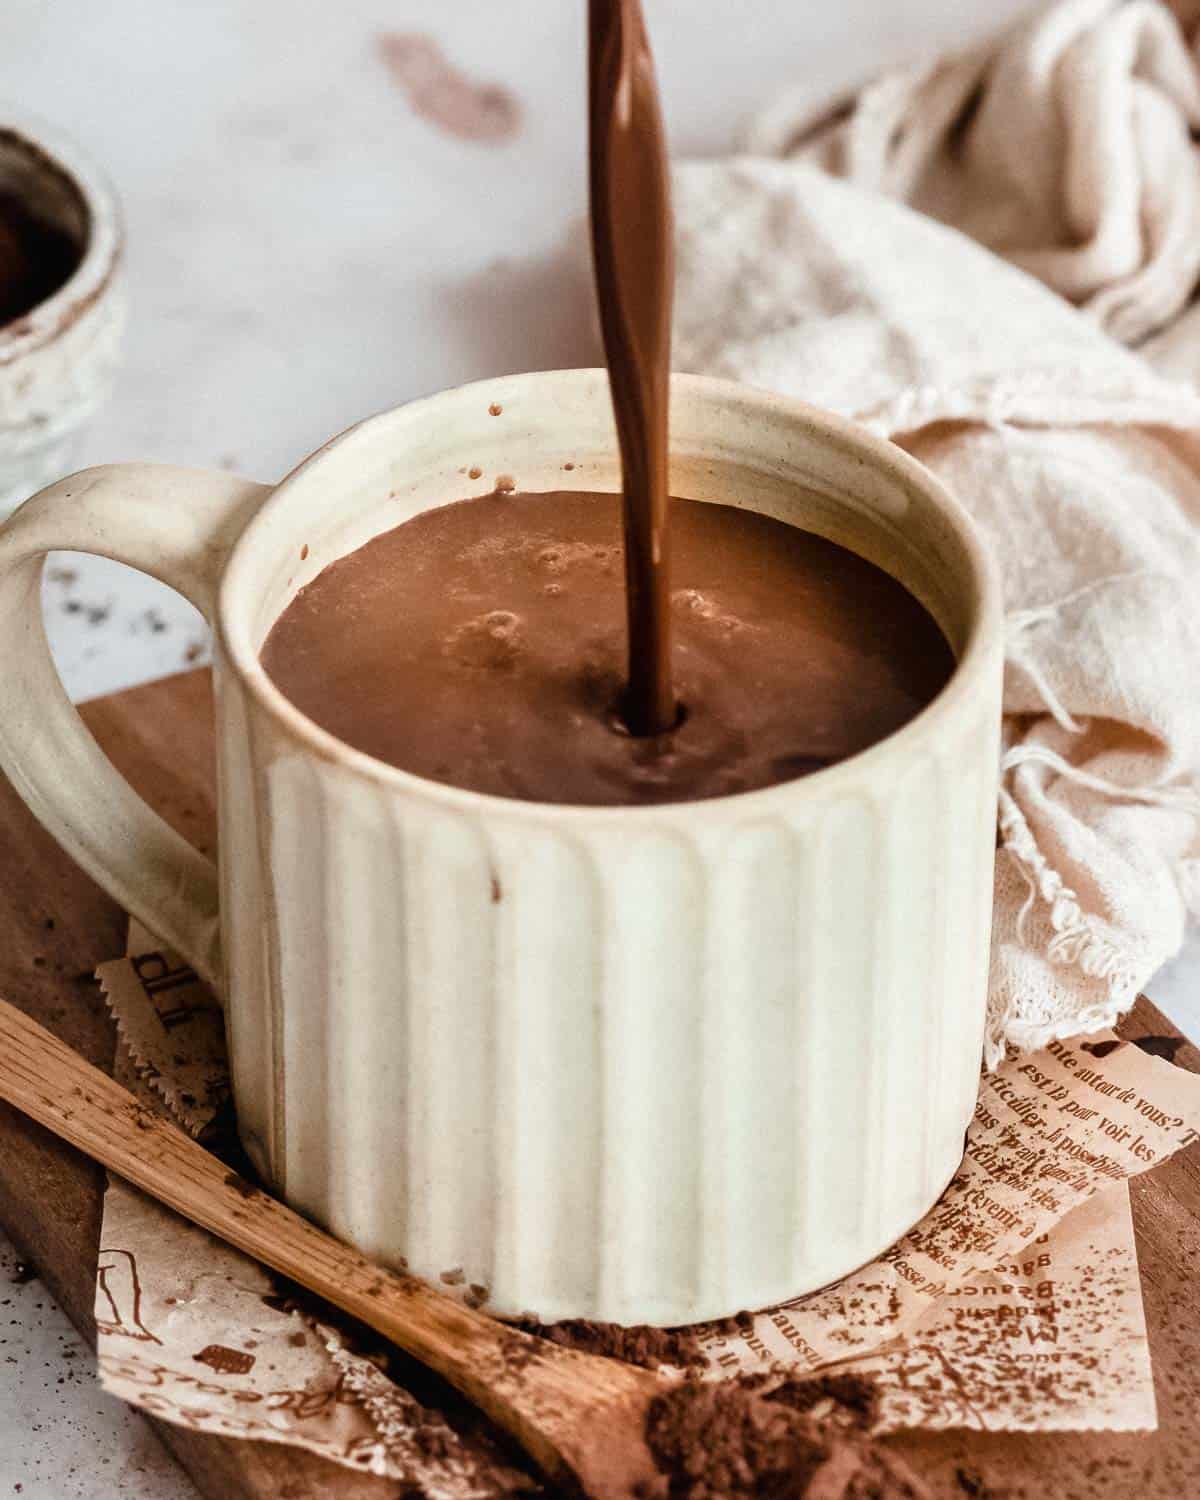 hot chocolate bein poured into a mug.